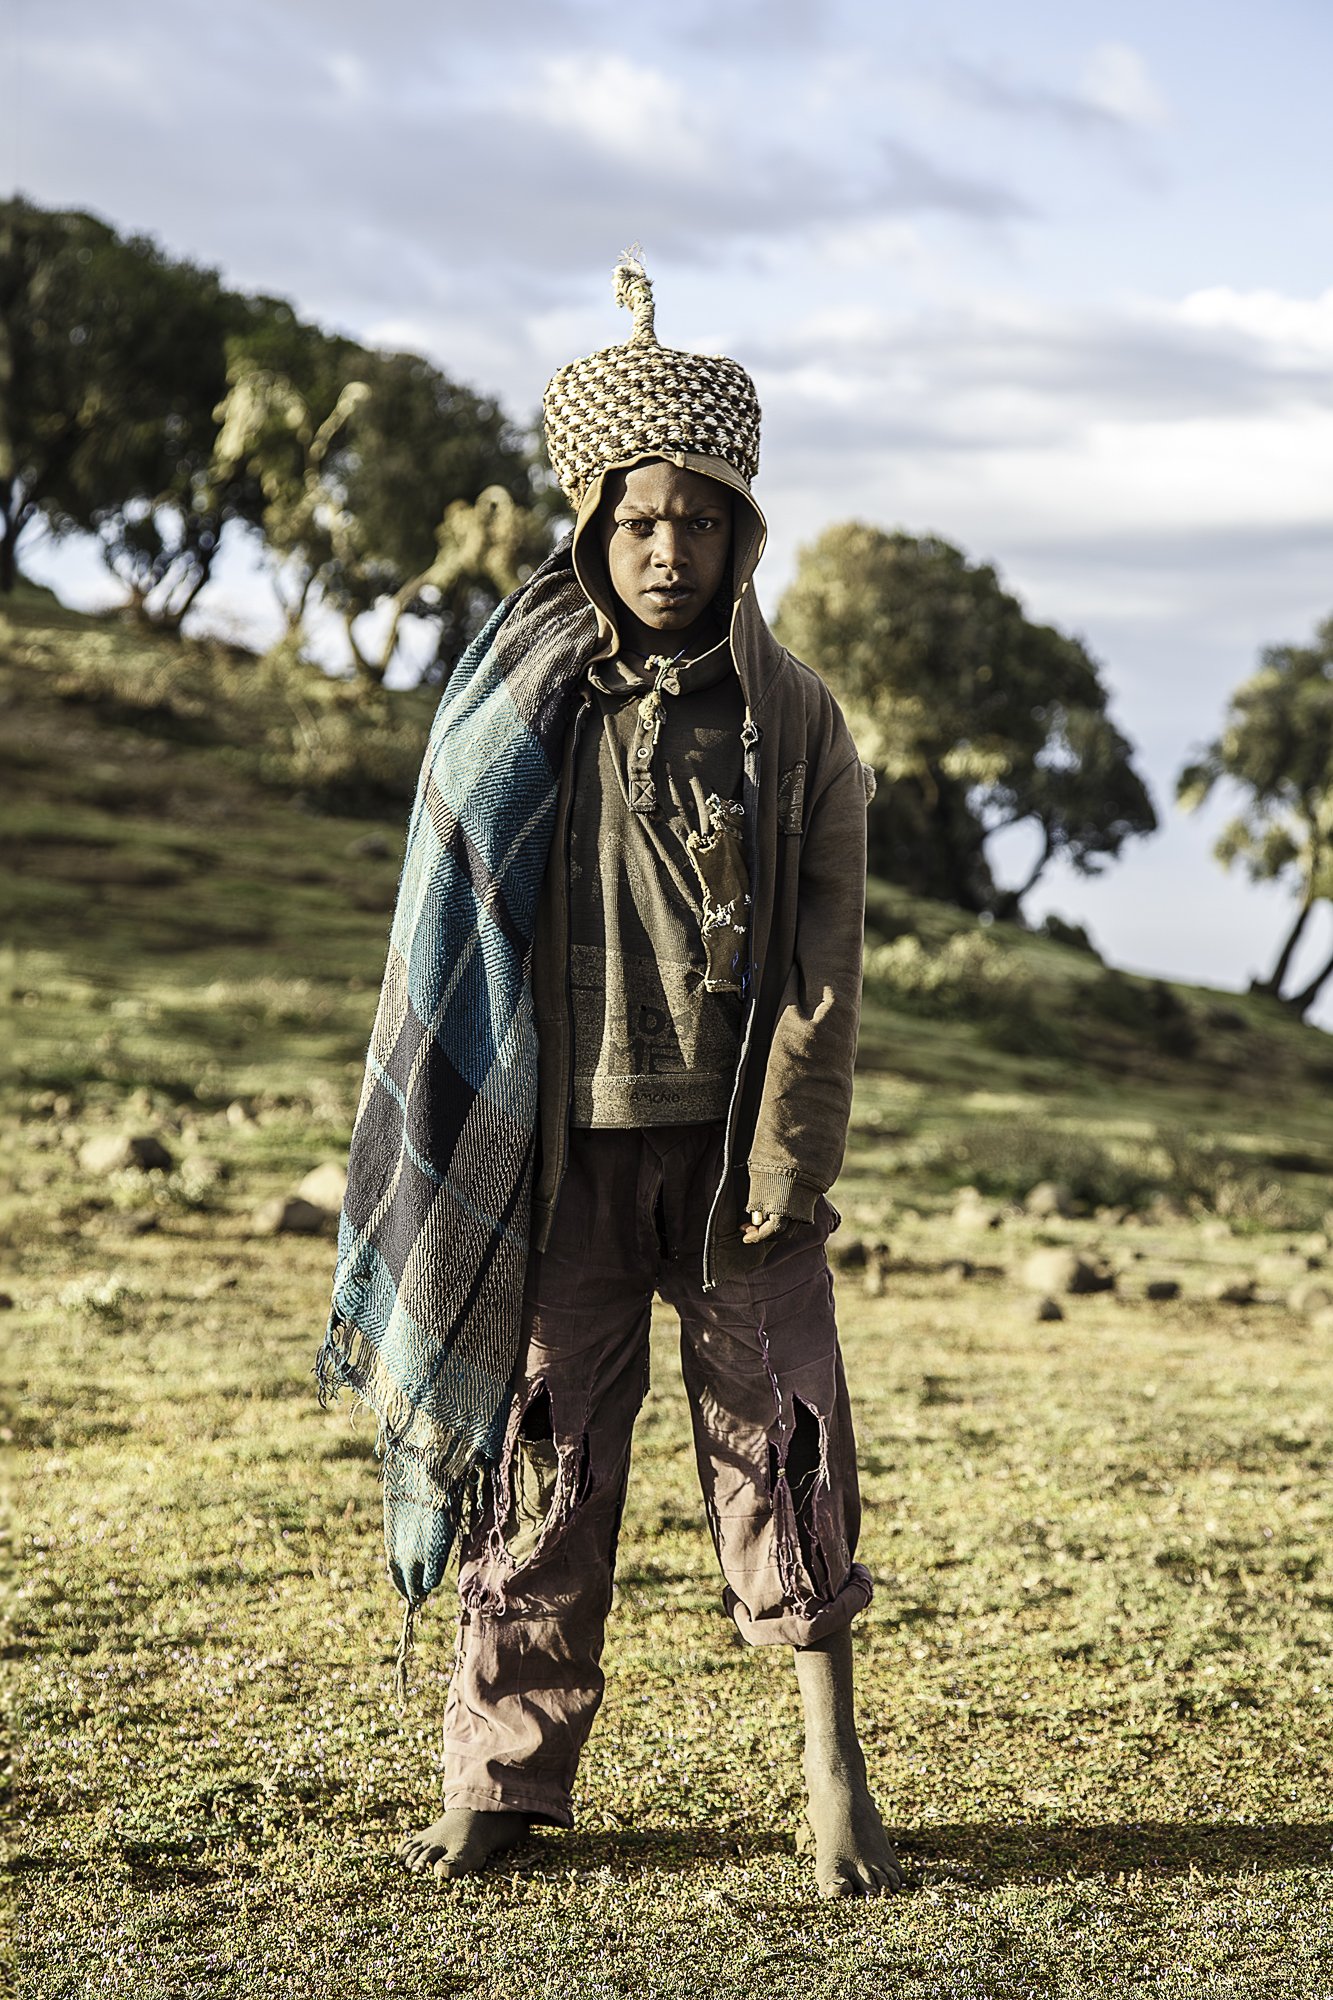 DavidOliver-portrait-photographer-semien-ethiopia-004.jpg